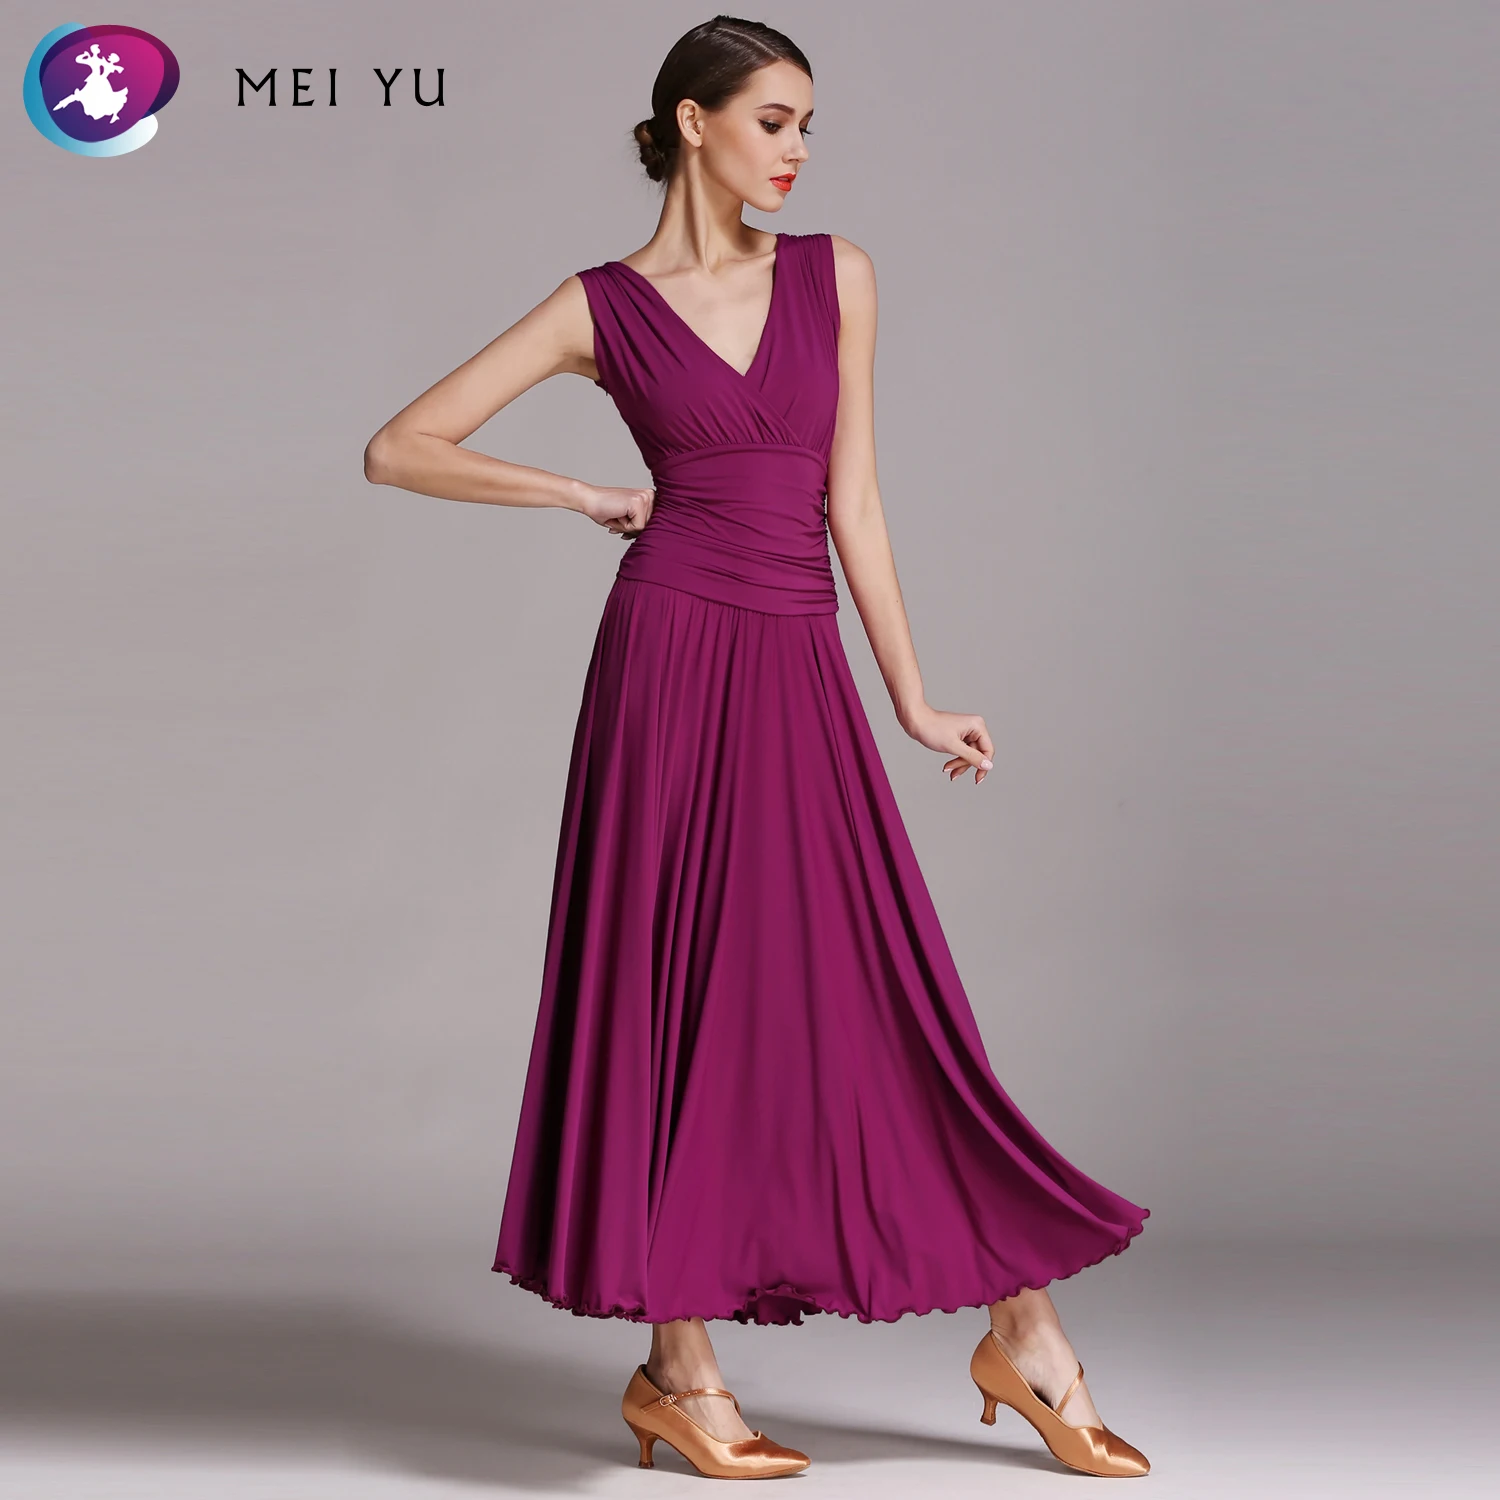 

MEI YU S8006 Modern Dance Costume Women Ladies Adults Waltzing Tango Dancing Dress Ballroom Costume Evening Party Dress